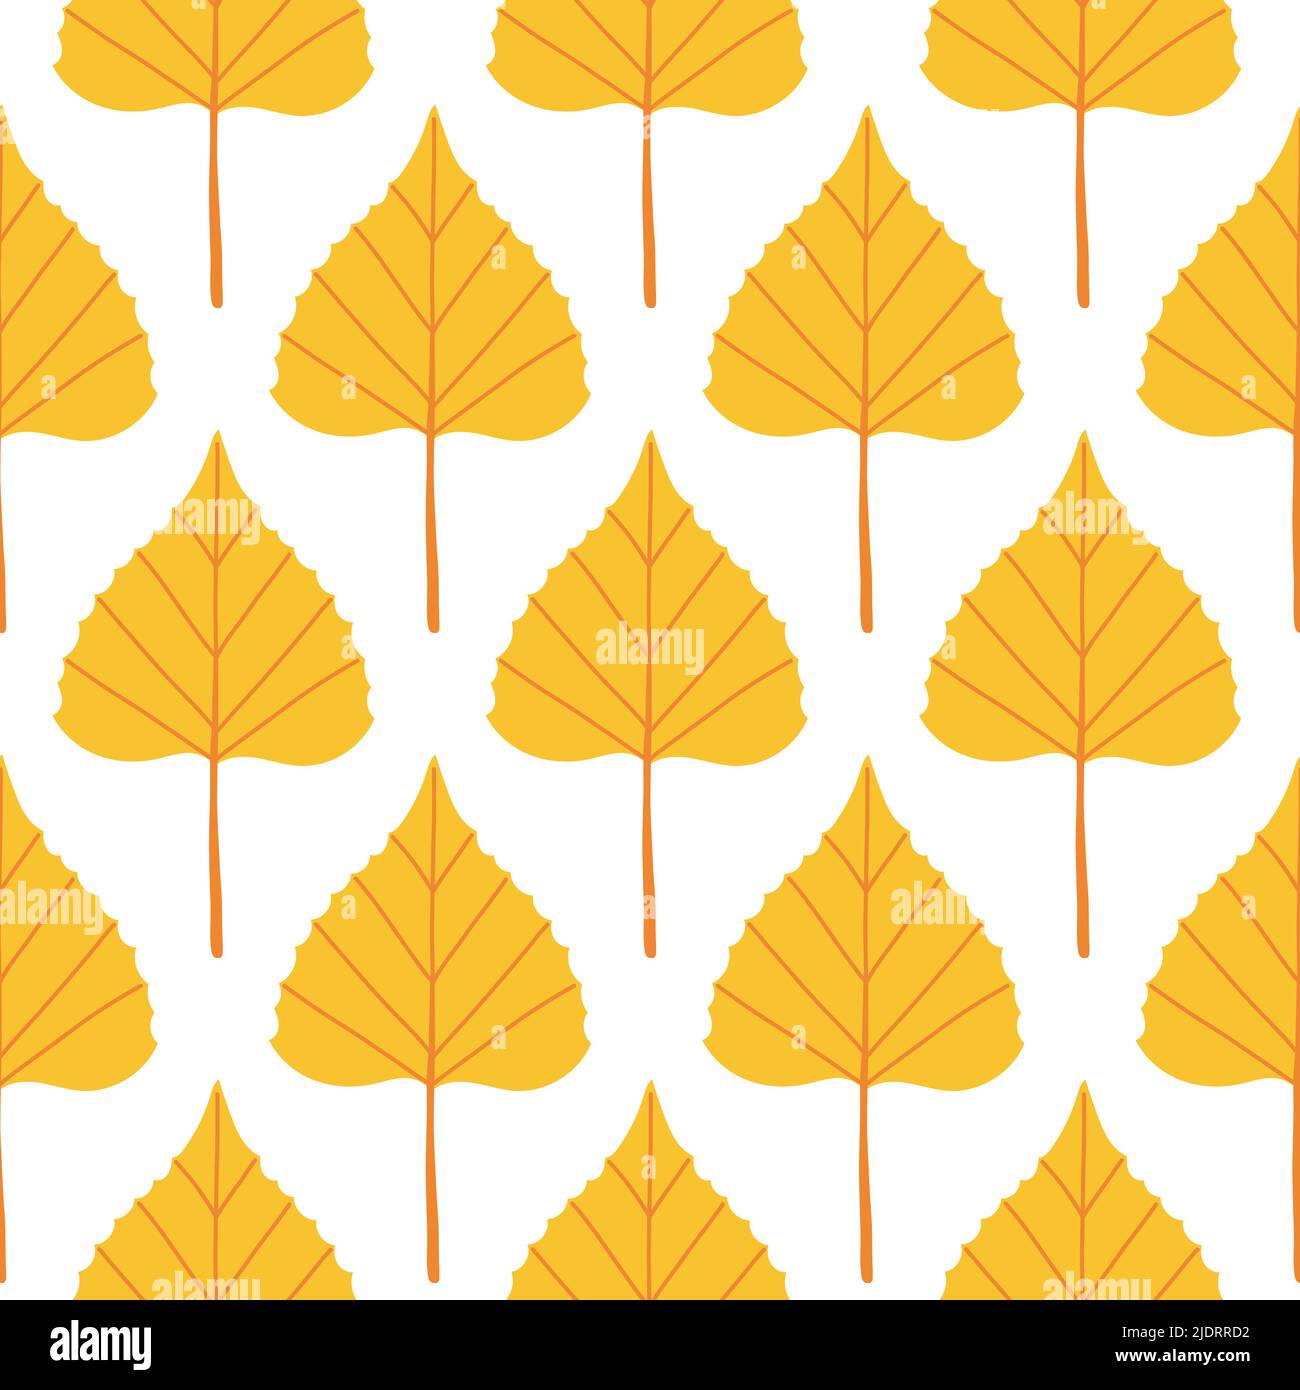 Herbst Blatt nahtlose Muster Vektor einfache Blätter Stock Vektor